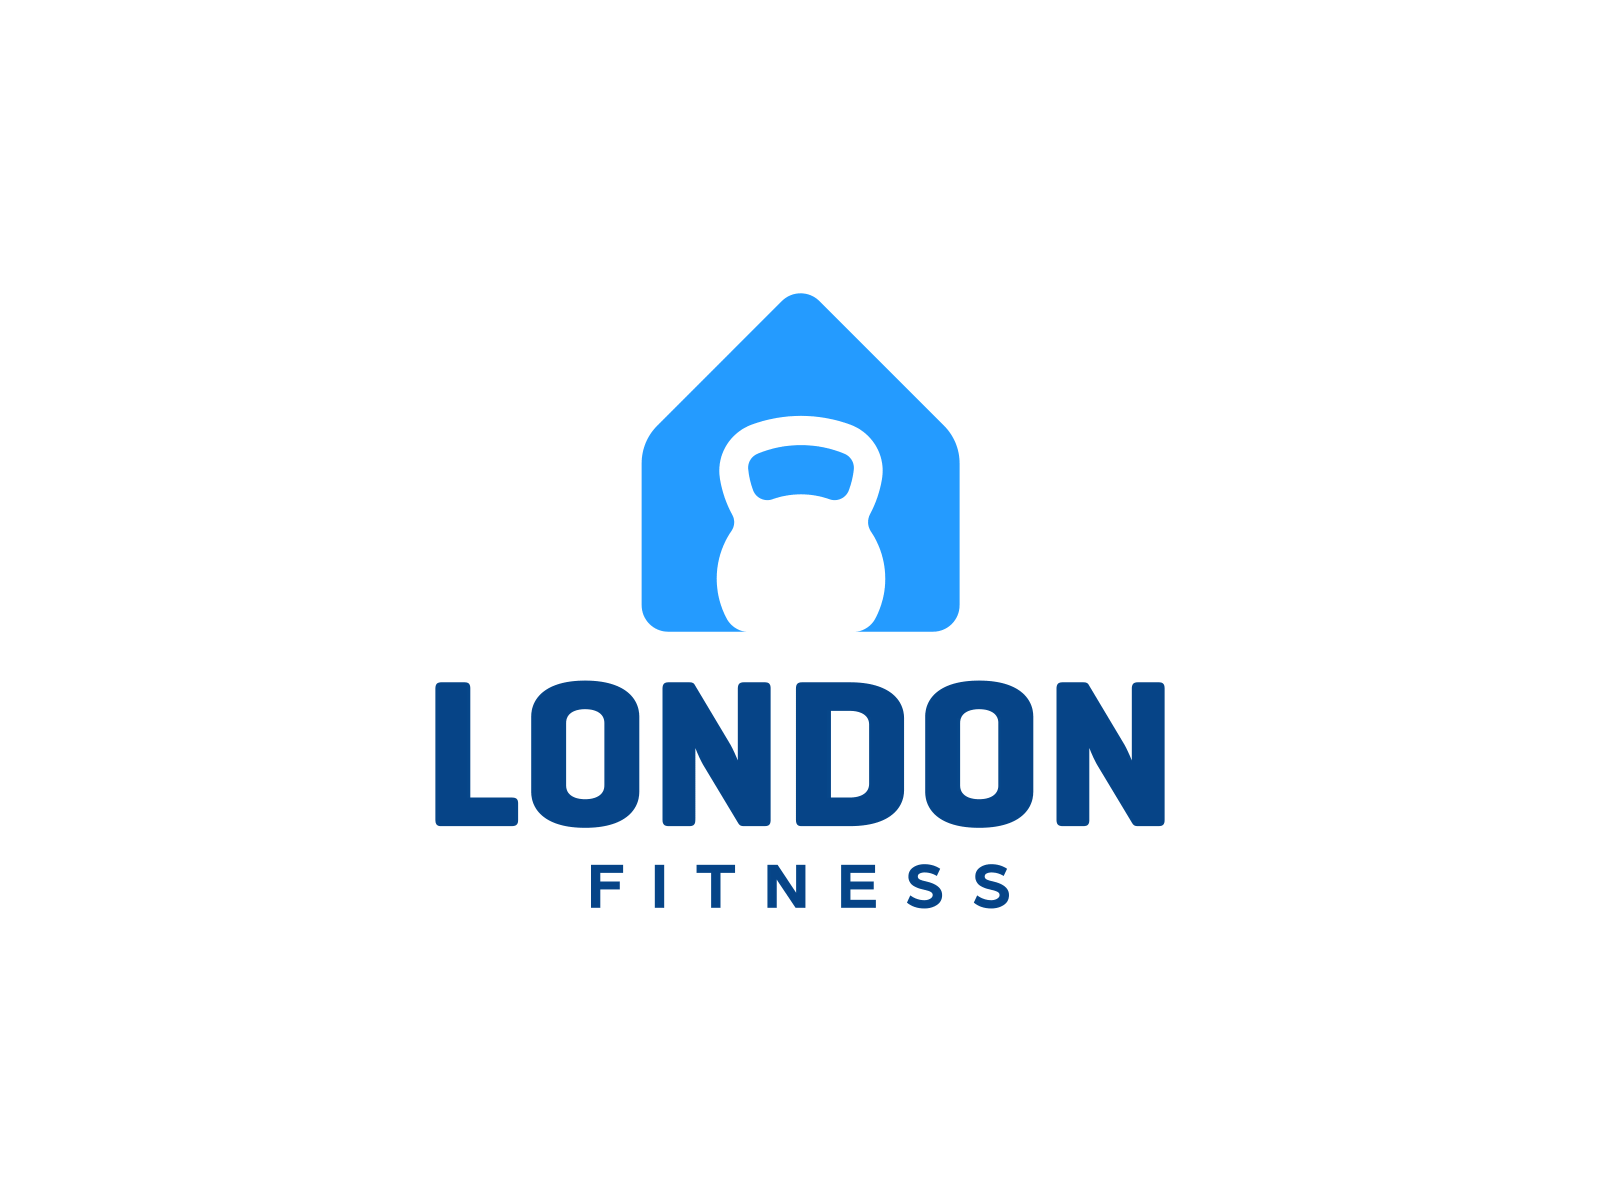 London Fitness Logo Animation